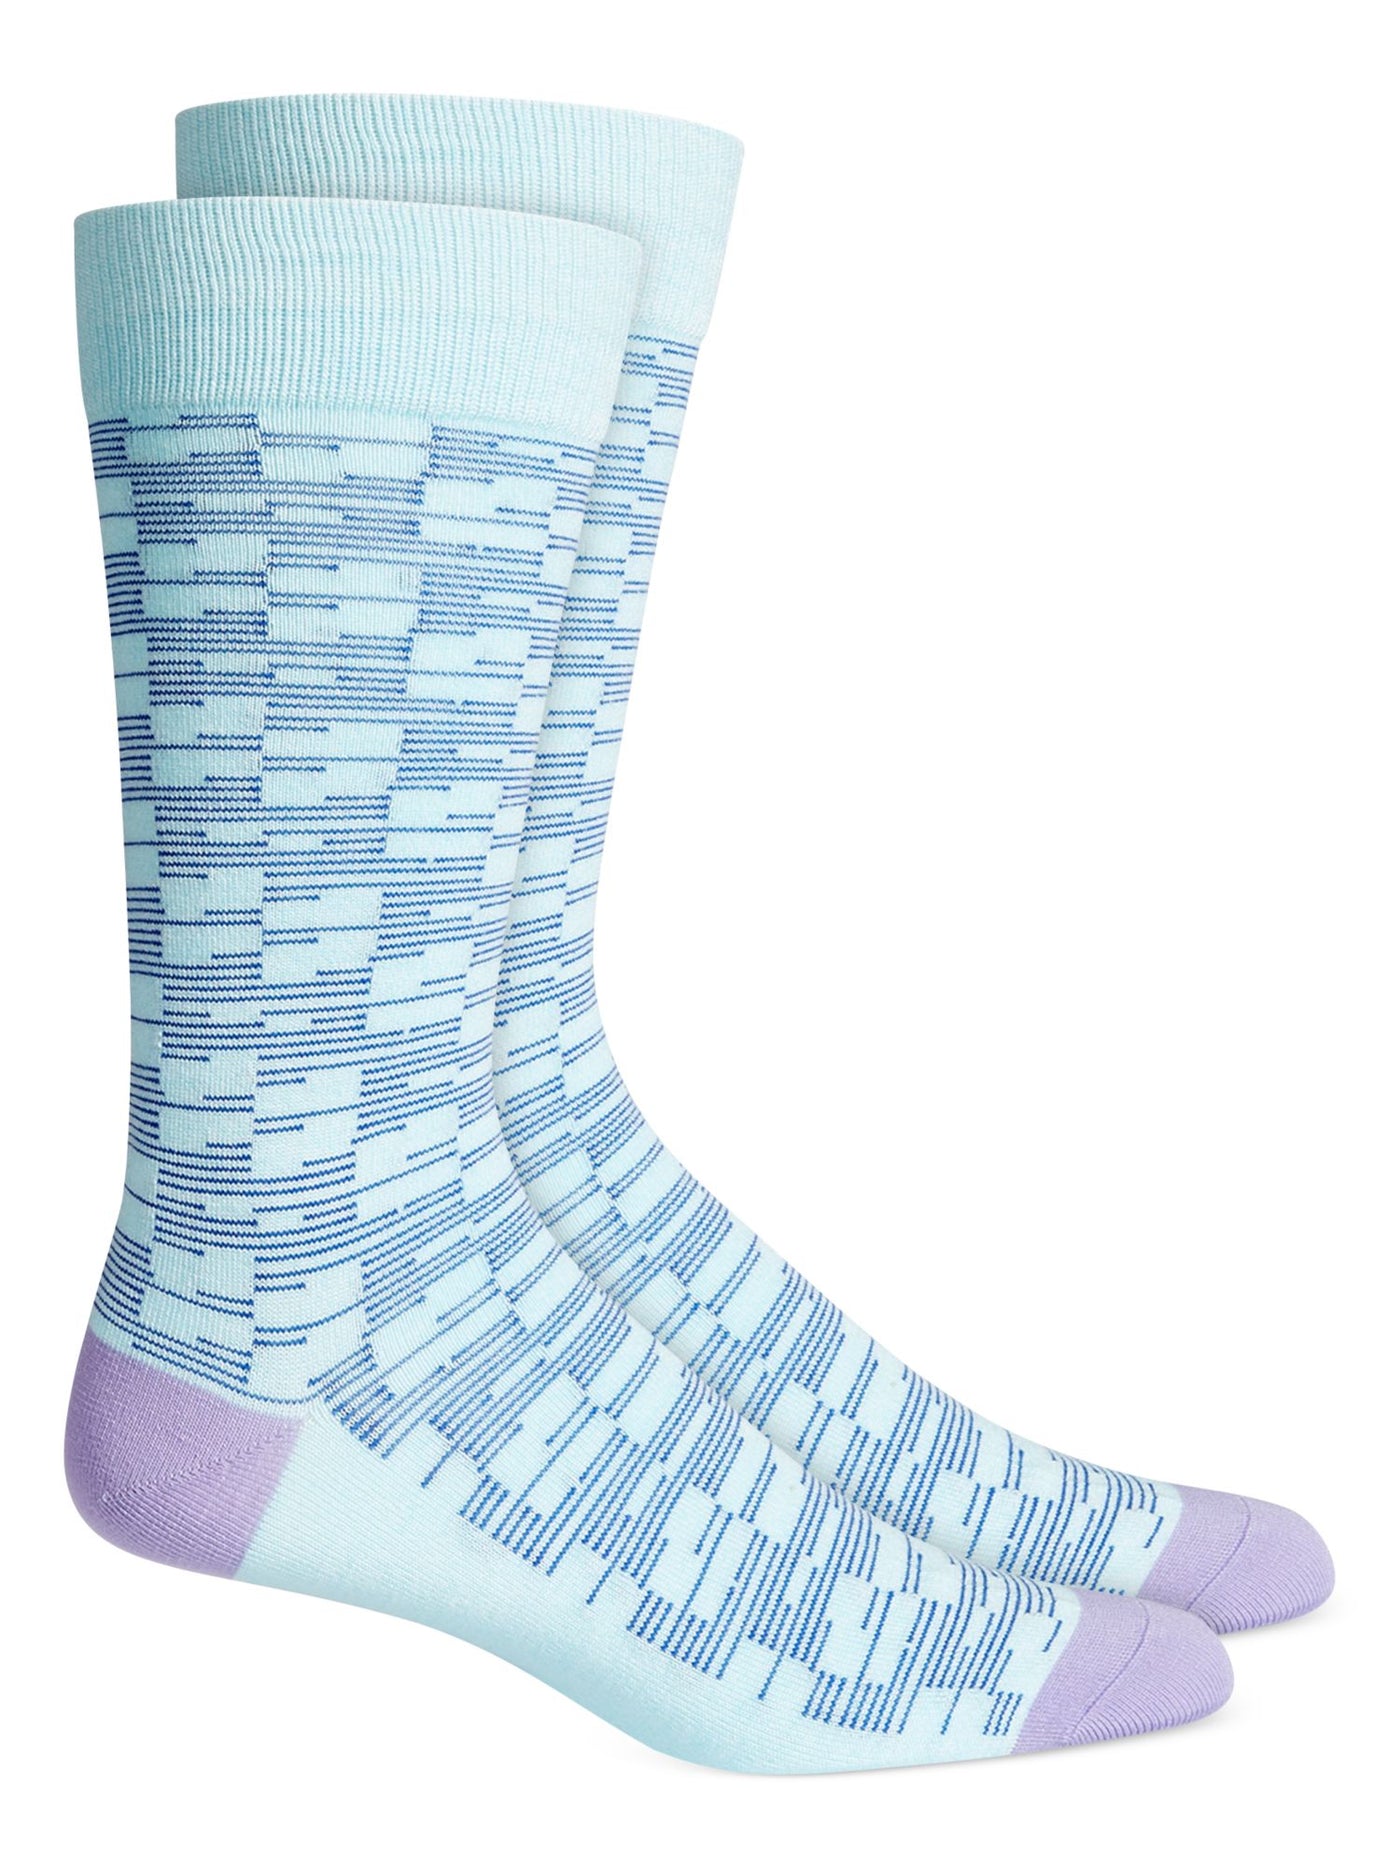 ALFATECH BY ALFANI Mens Hyper Blue Broken Stripe Ribbed-Knit Cuffs Antimicrobial Seamless Moisture Wicking Dress Crew Socks 7-12